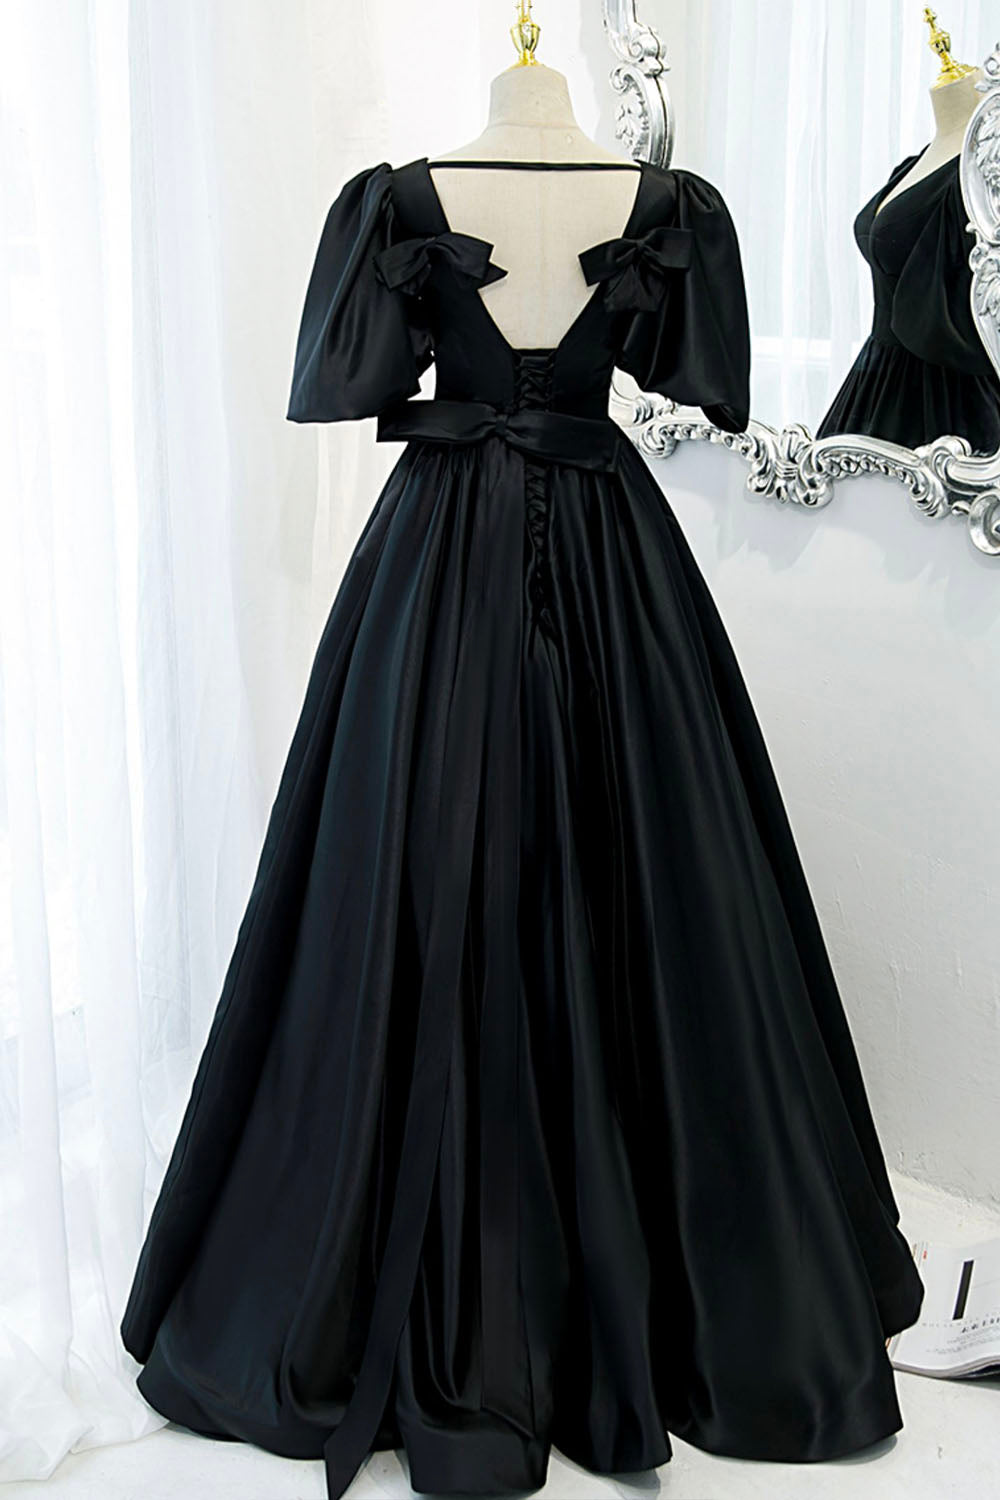 Black V-Neck Satin Long Prom Dress, A-Line Short Sleeve Evening Dress